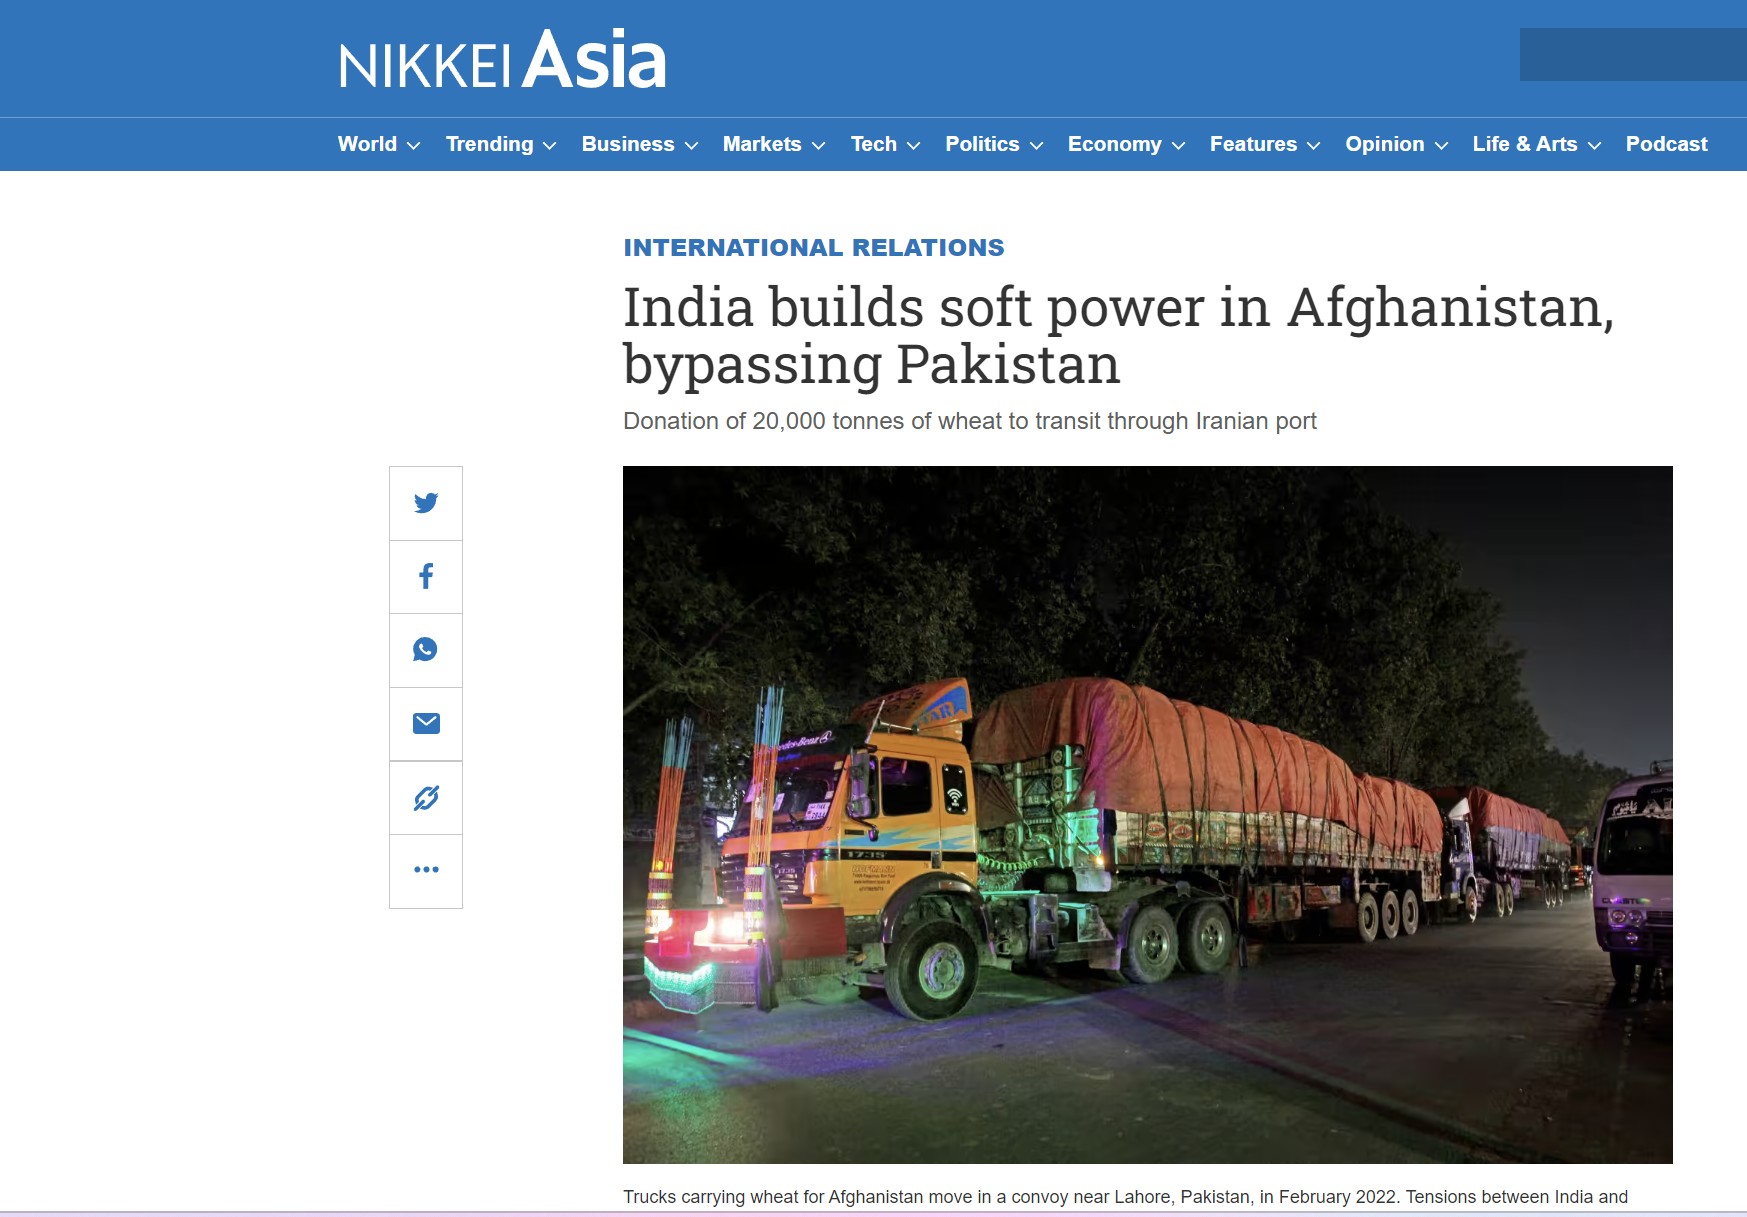 Nikkei Asia: Η Ινδία χτίζει ήπια δύναμη στο Αφγανιστάν, παρακάμπτοντας το Πακιστάν